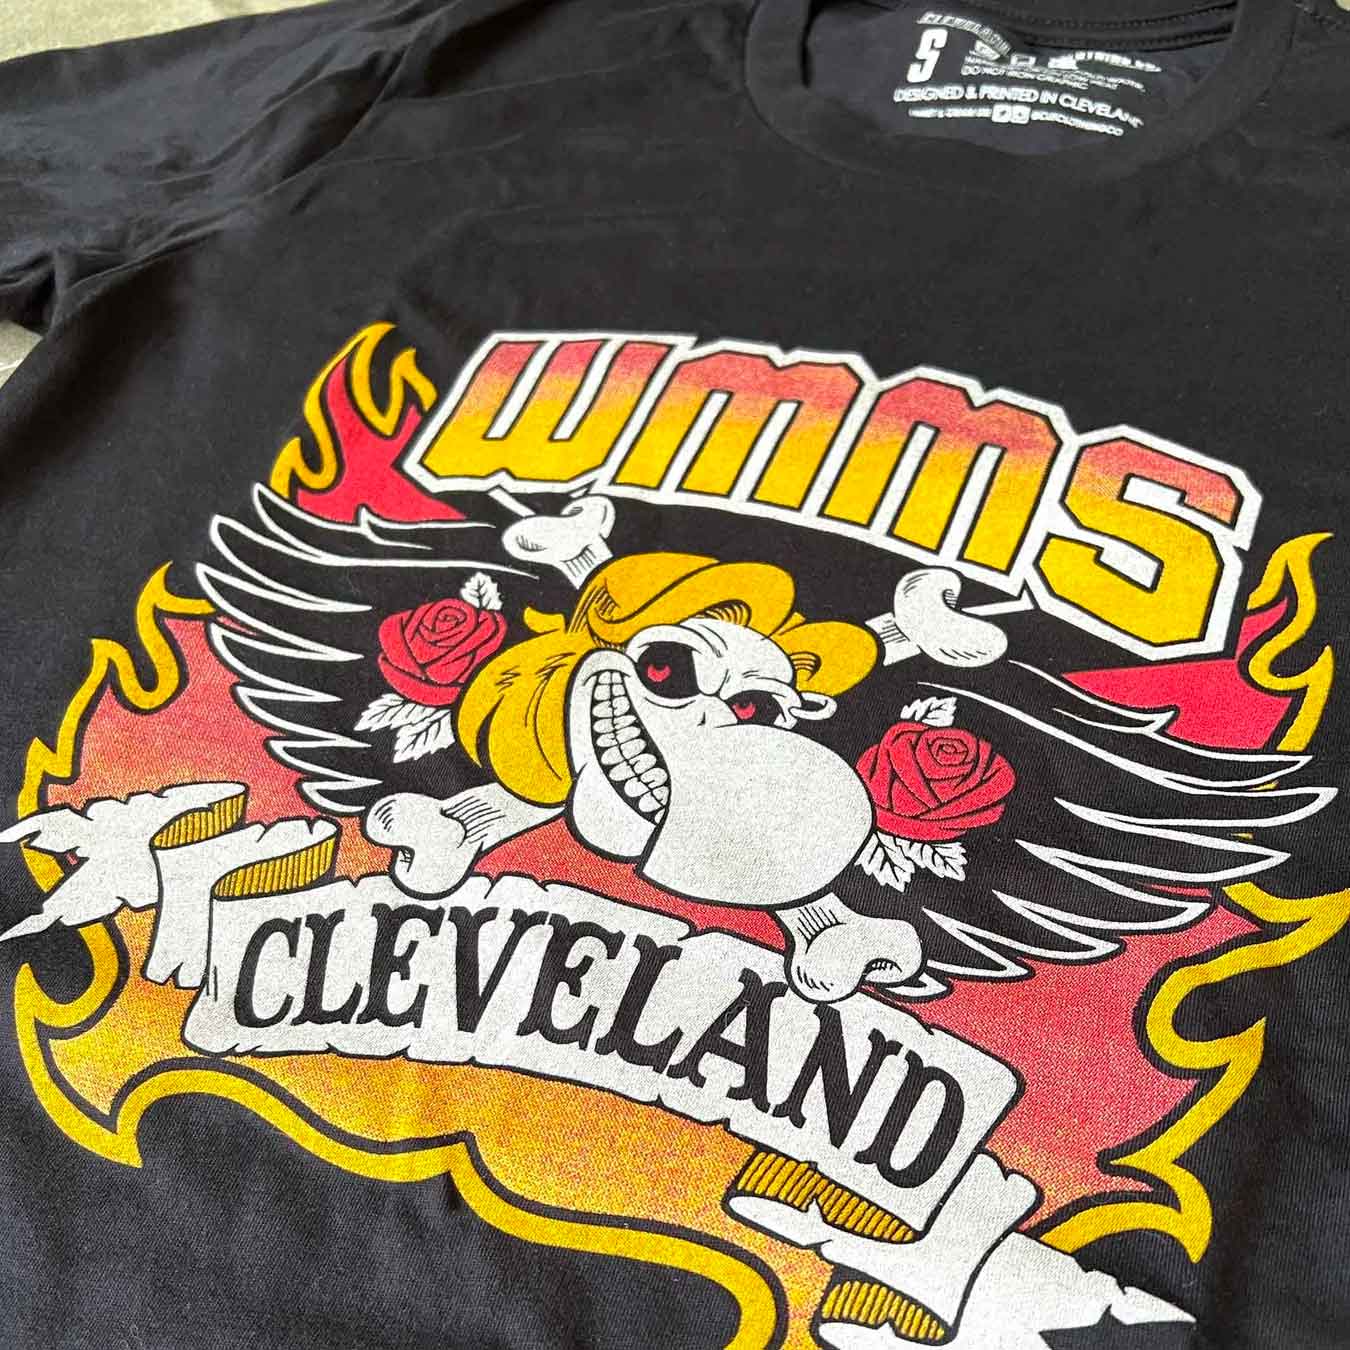 Wmms Cleveland Baseball Rock Mascot Shirt - Peanutstee